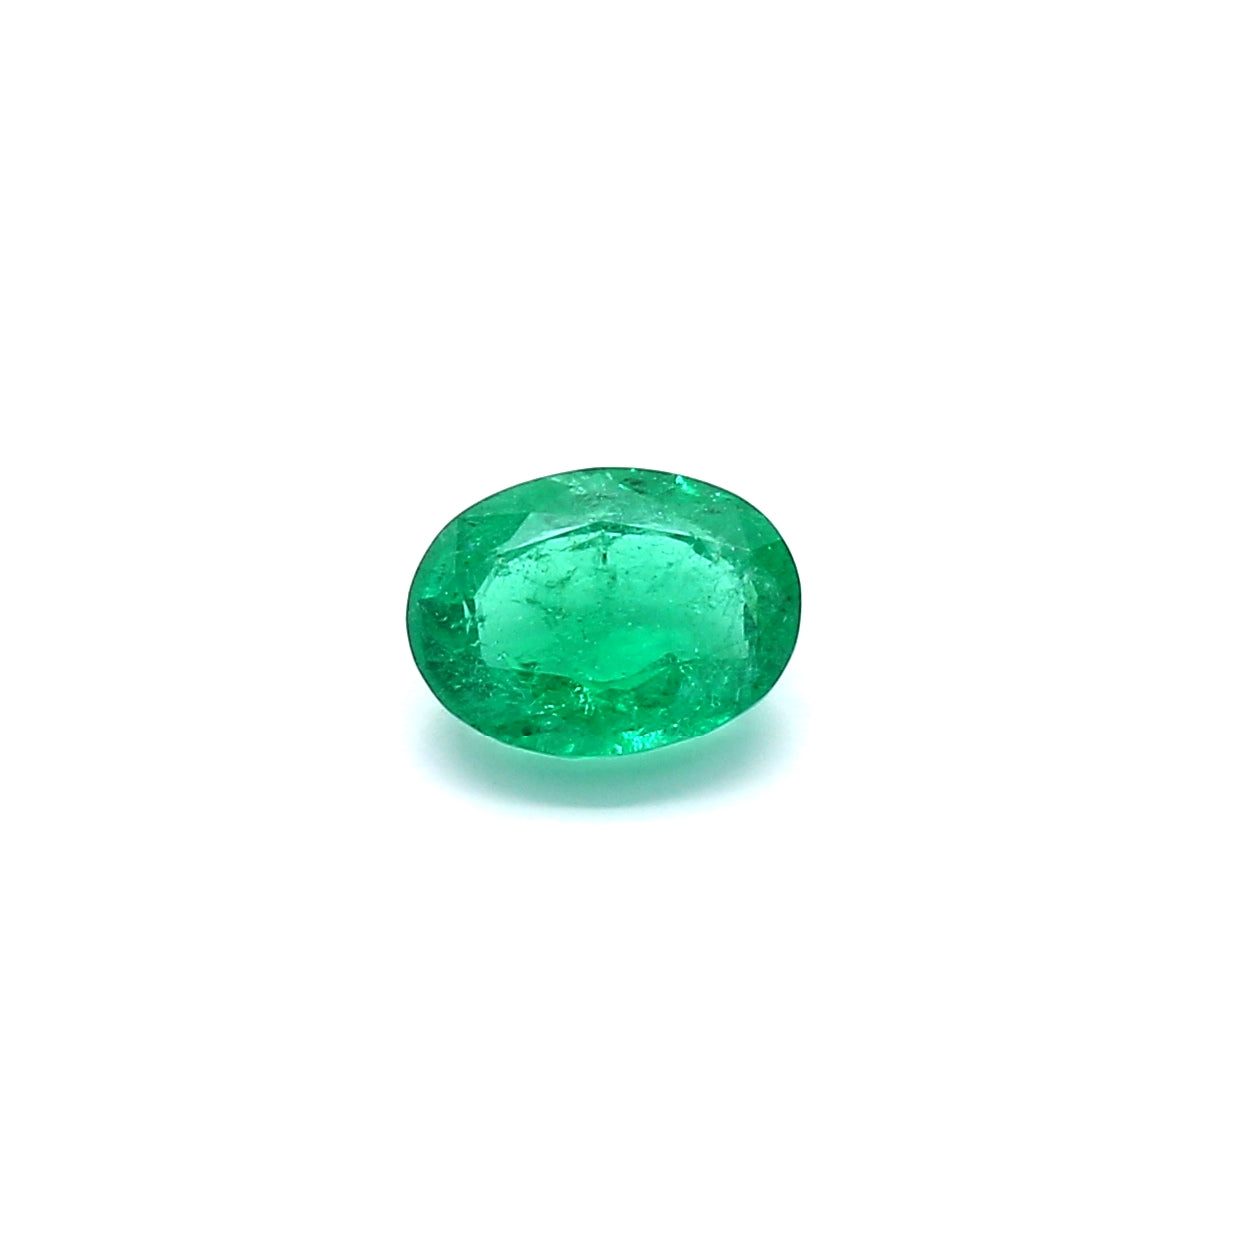 0.70ct Oval Emerald, Minor Oil, Russia - 6.90 x 5.23 x 3.00mm